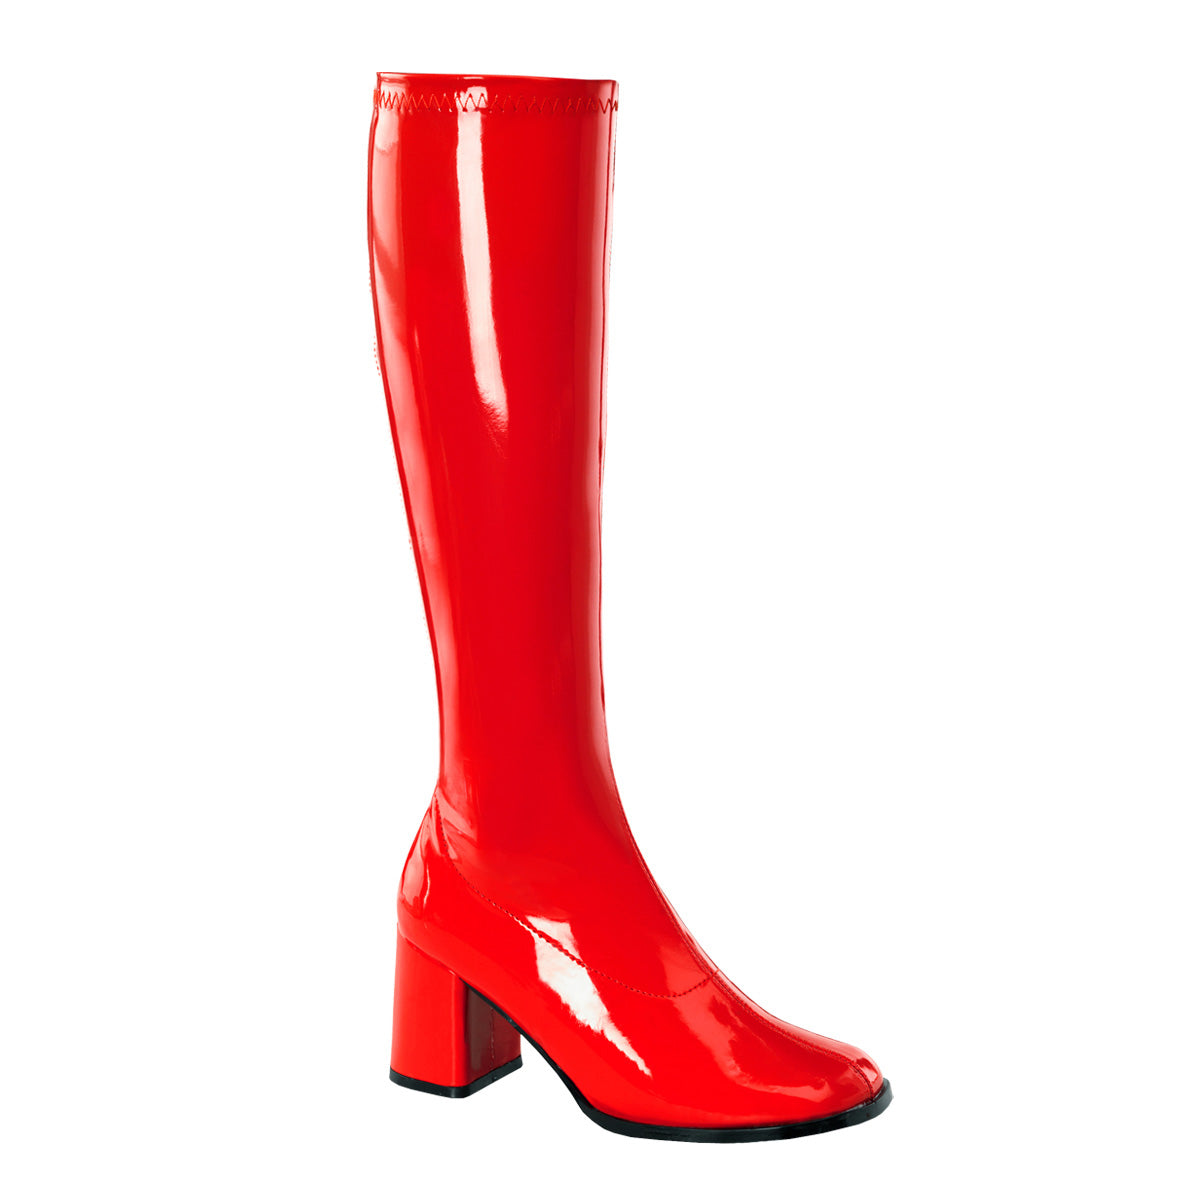 GOGO-300 3 Inch Heel Red Women's Boots Funtasma Costume Shoes